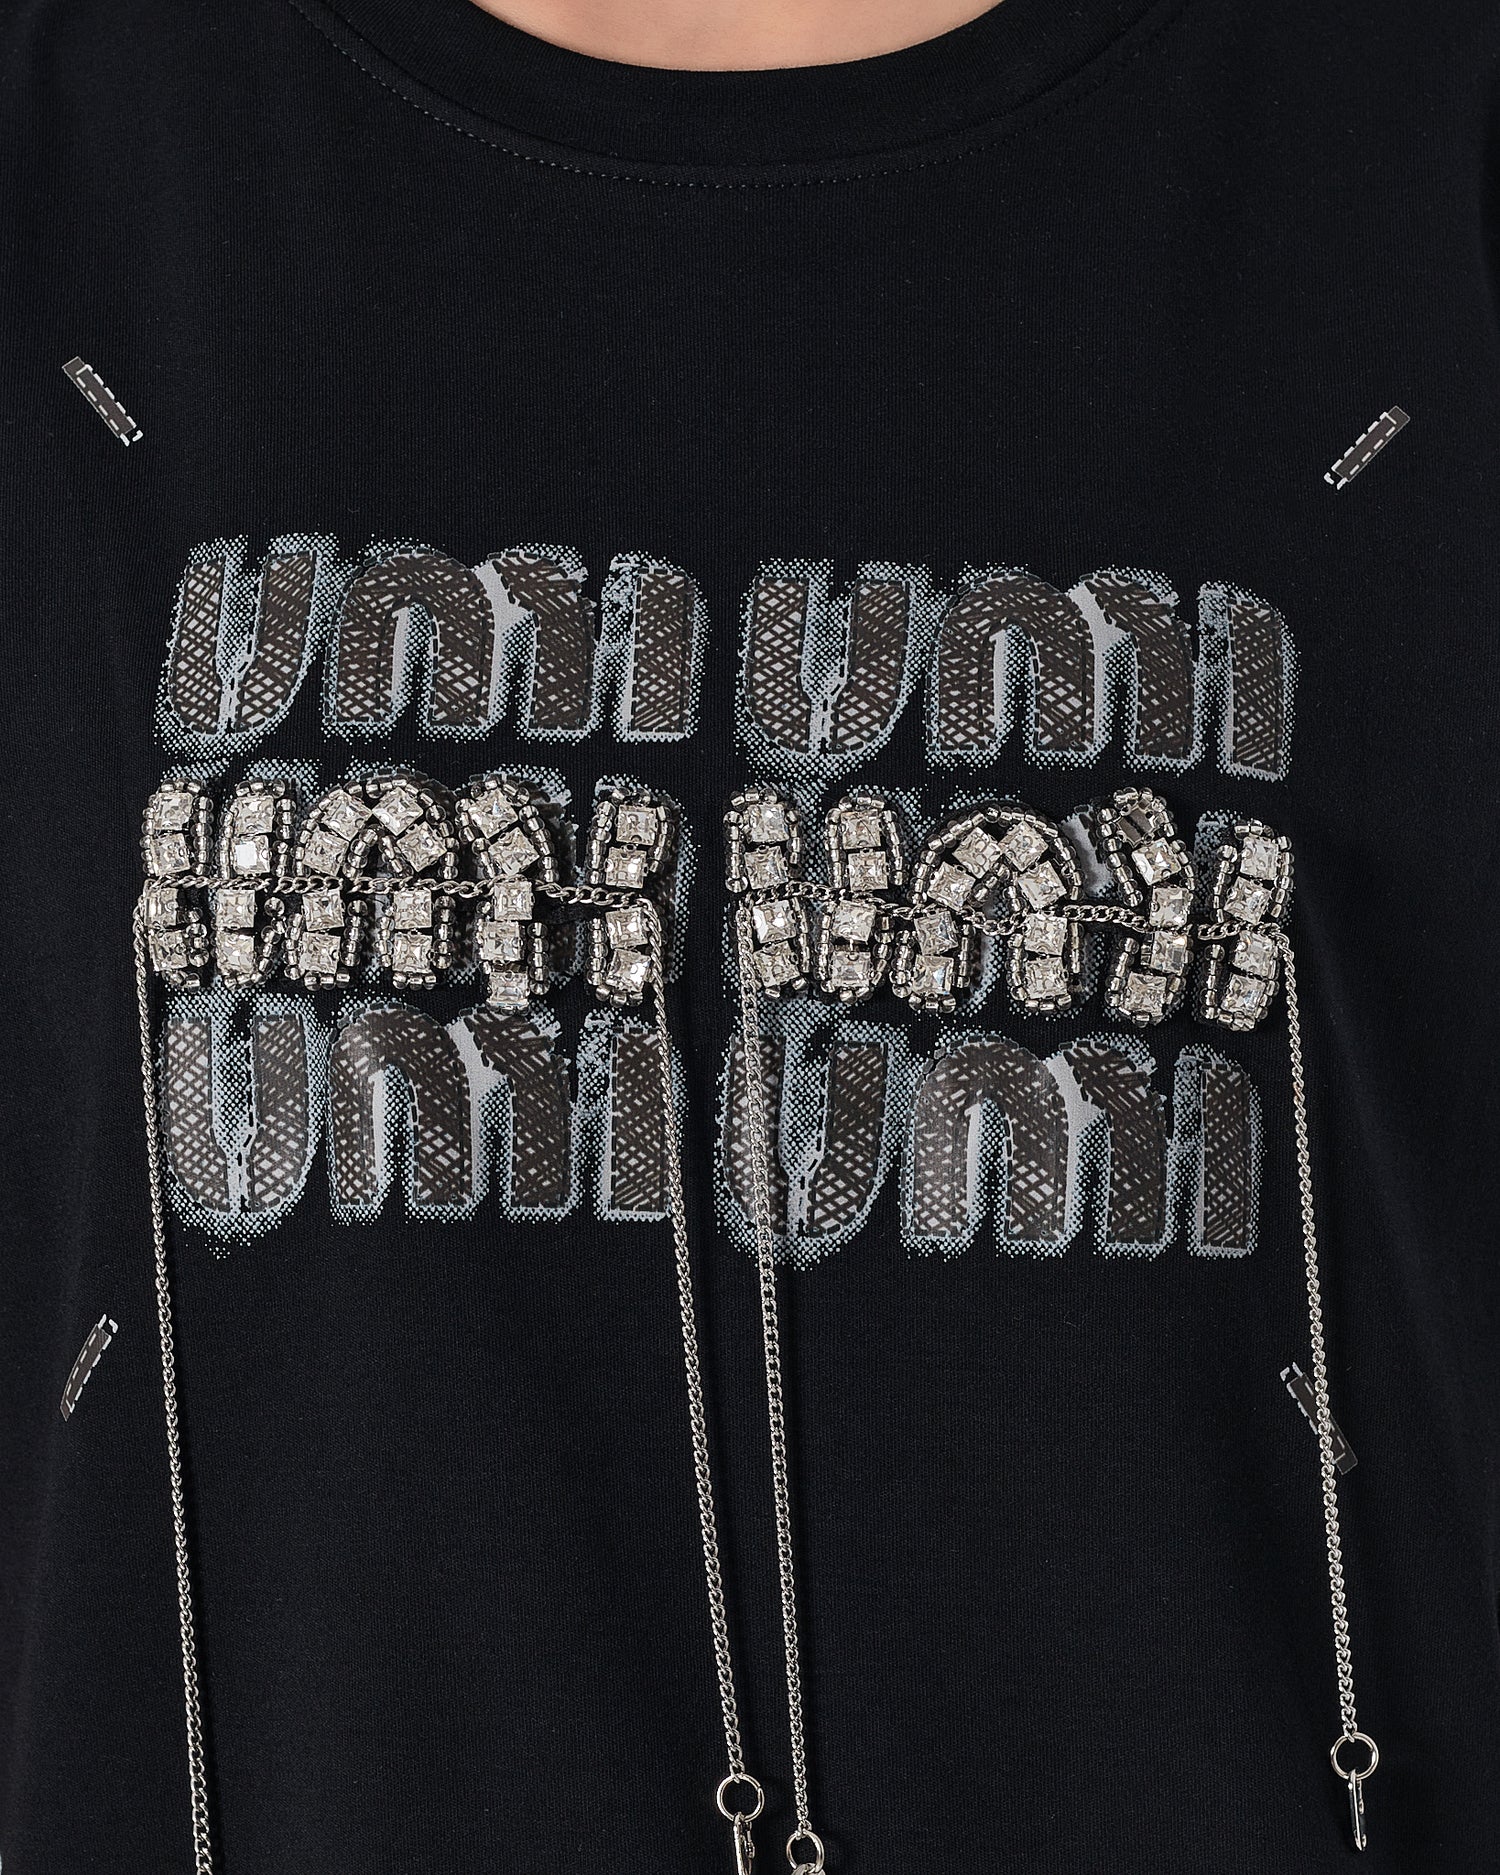 MIU Rhinestone Dripping Chain Lady Black T-Shirt 28.90